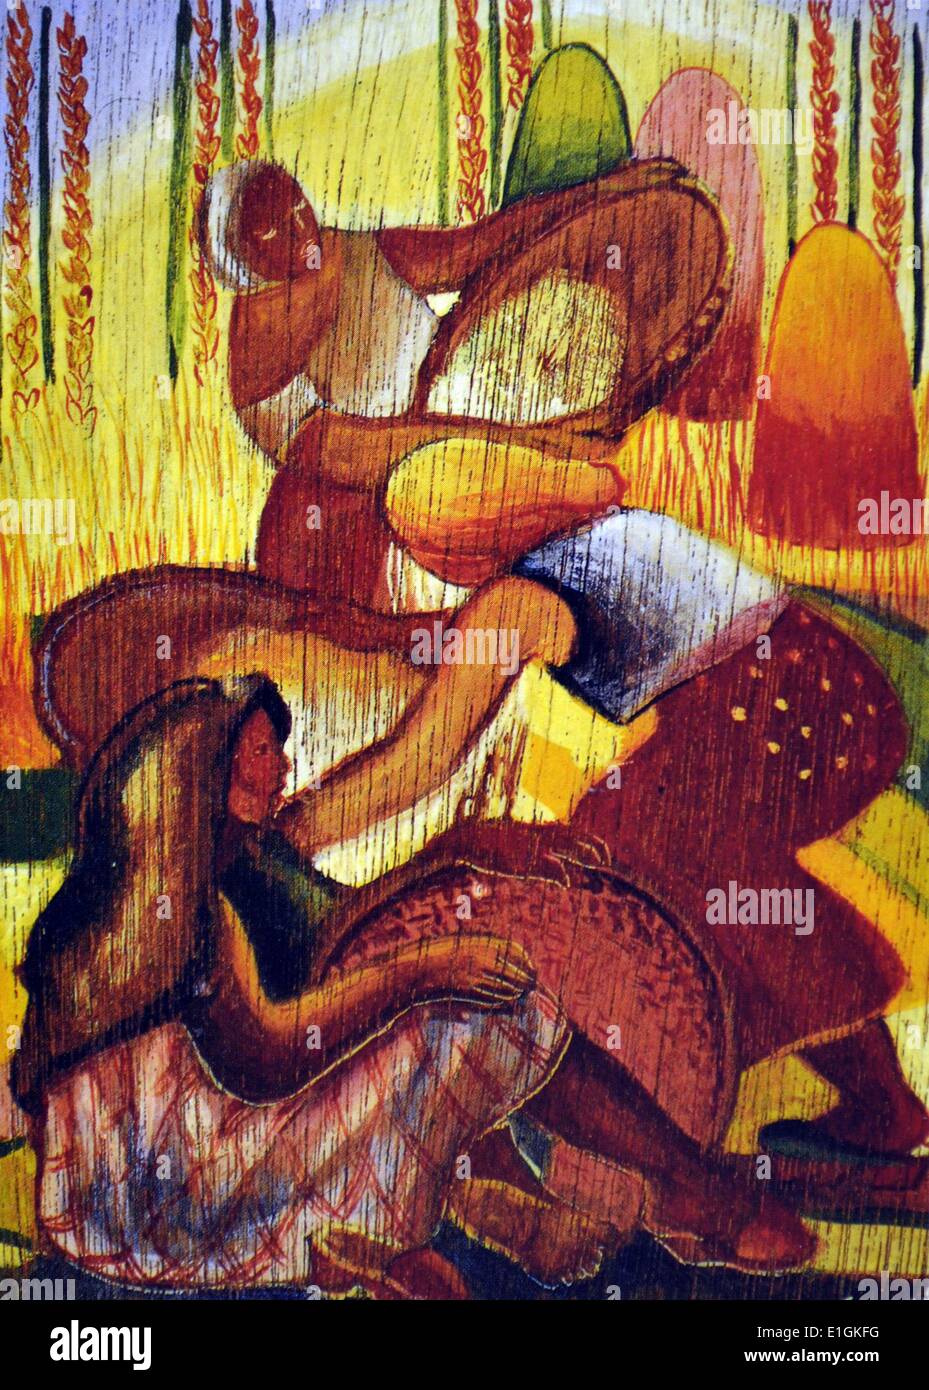 Nena Saguil, Winnowing Rice, 1951. Oil on canvas. Stock Photo